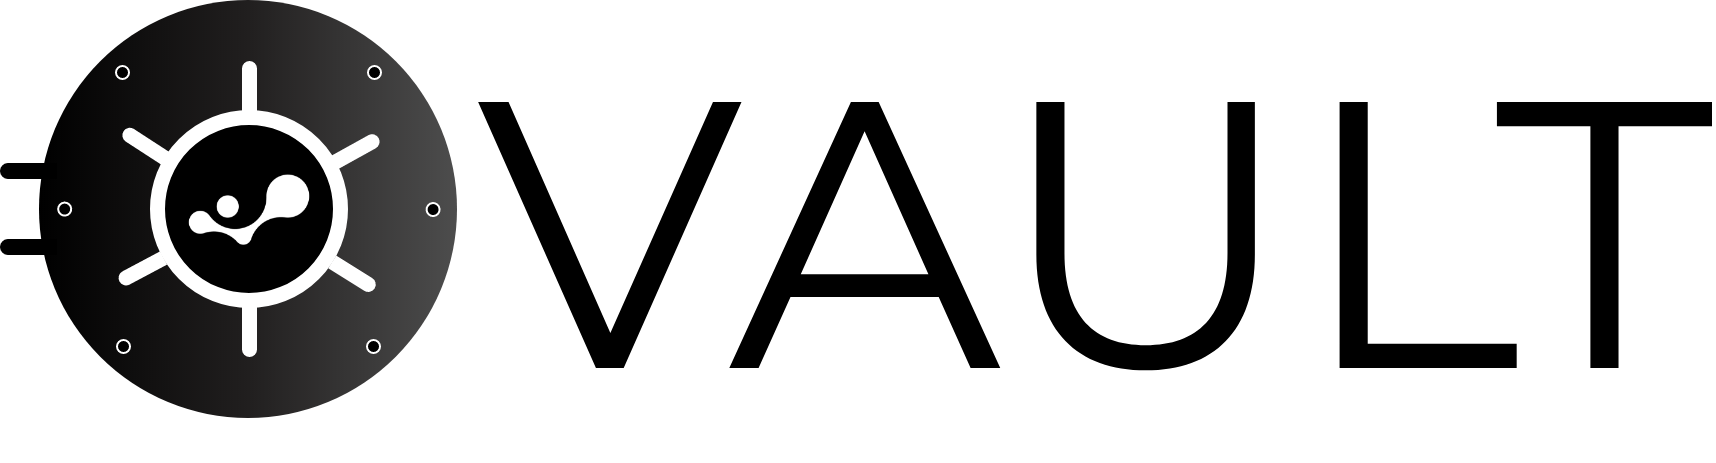 Vault Logo Final - Black